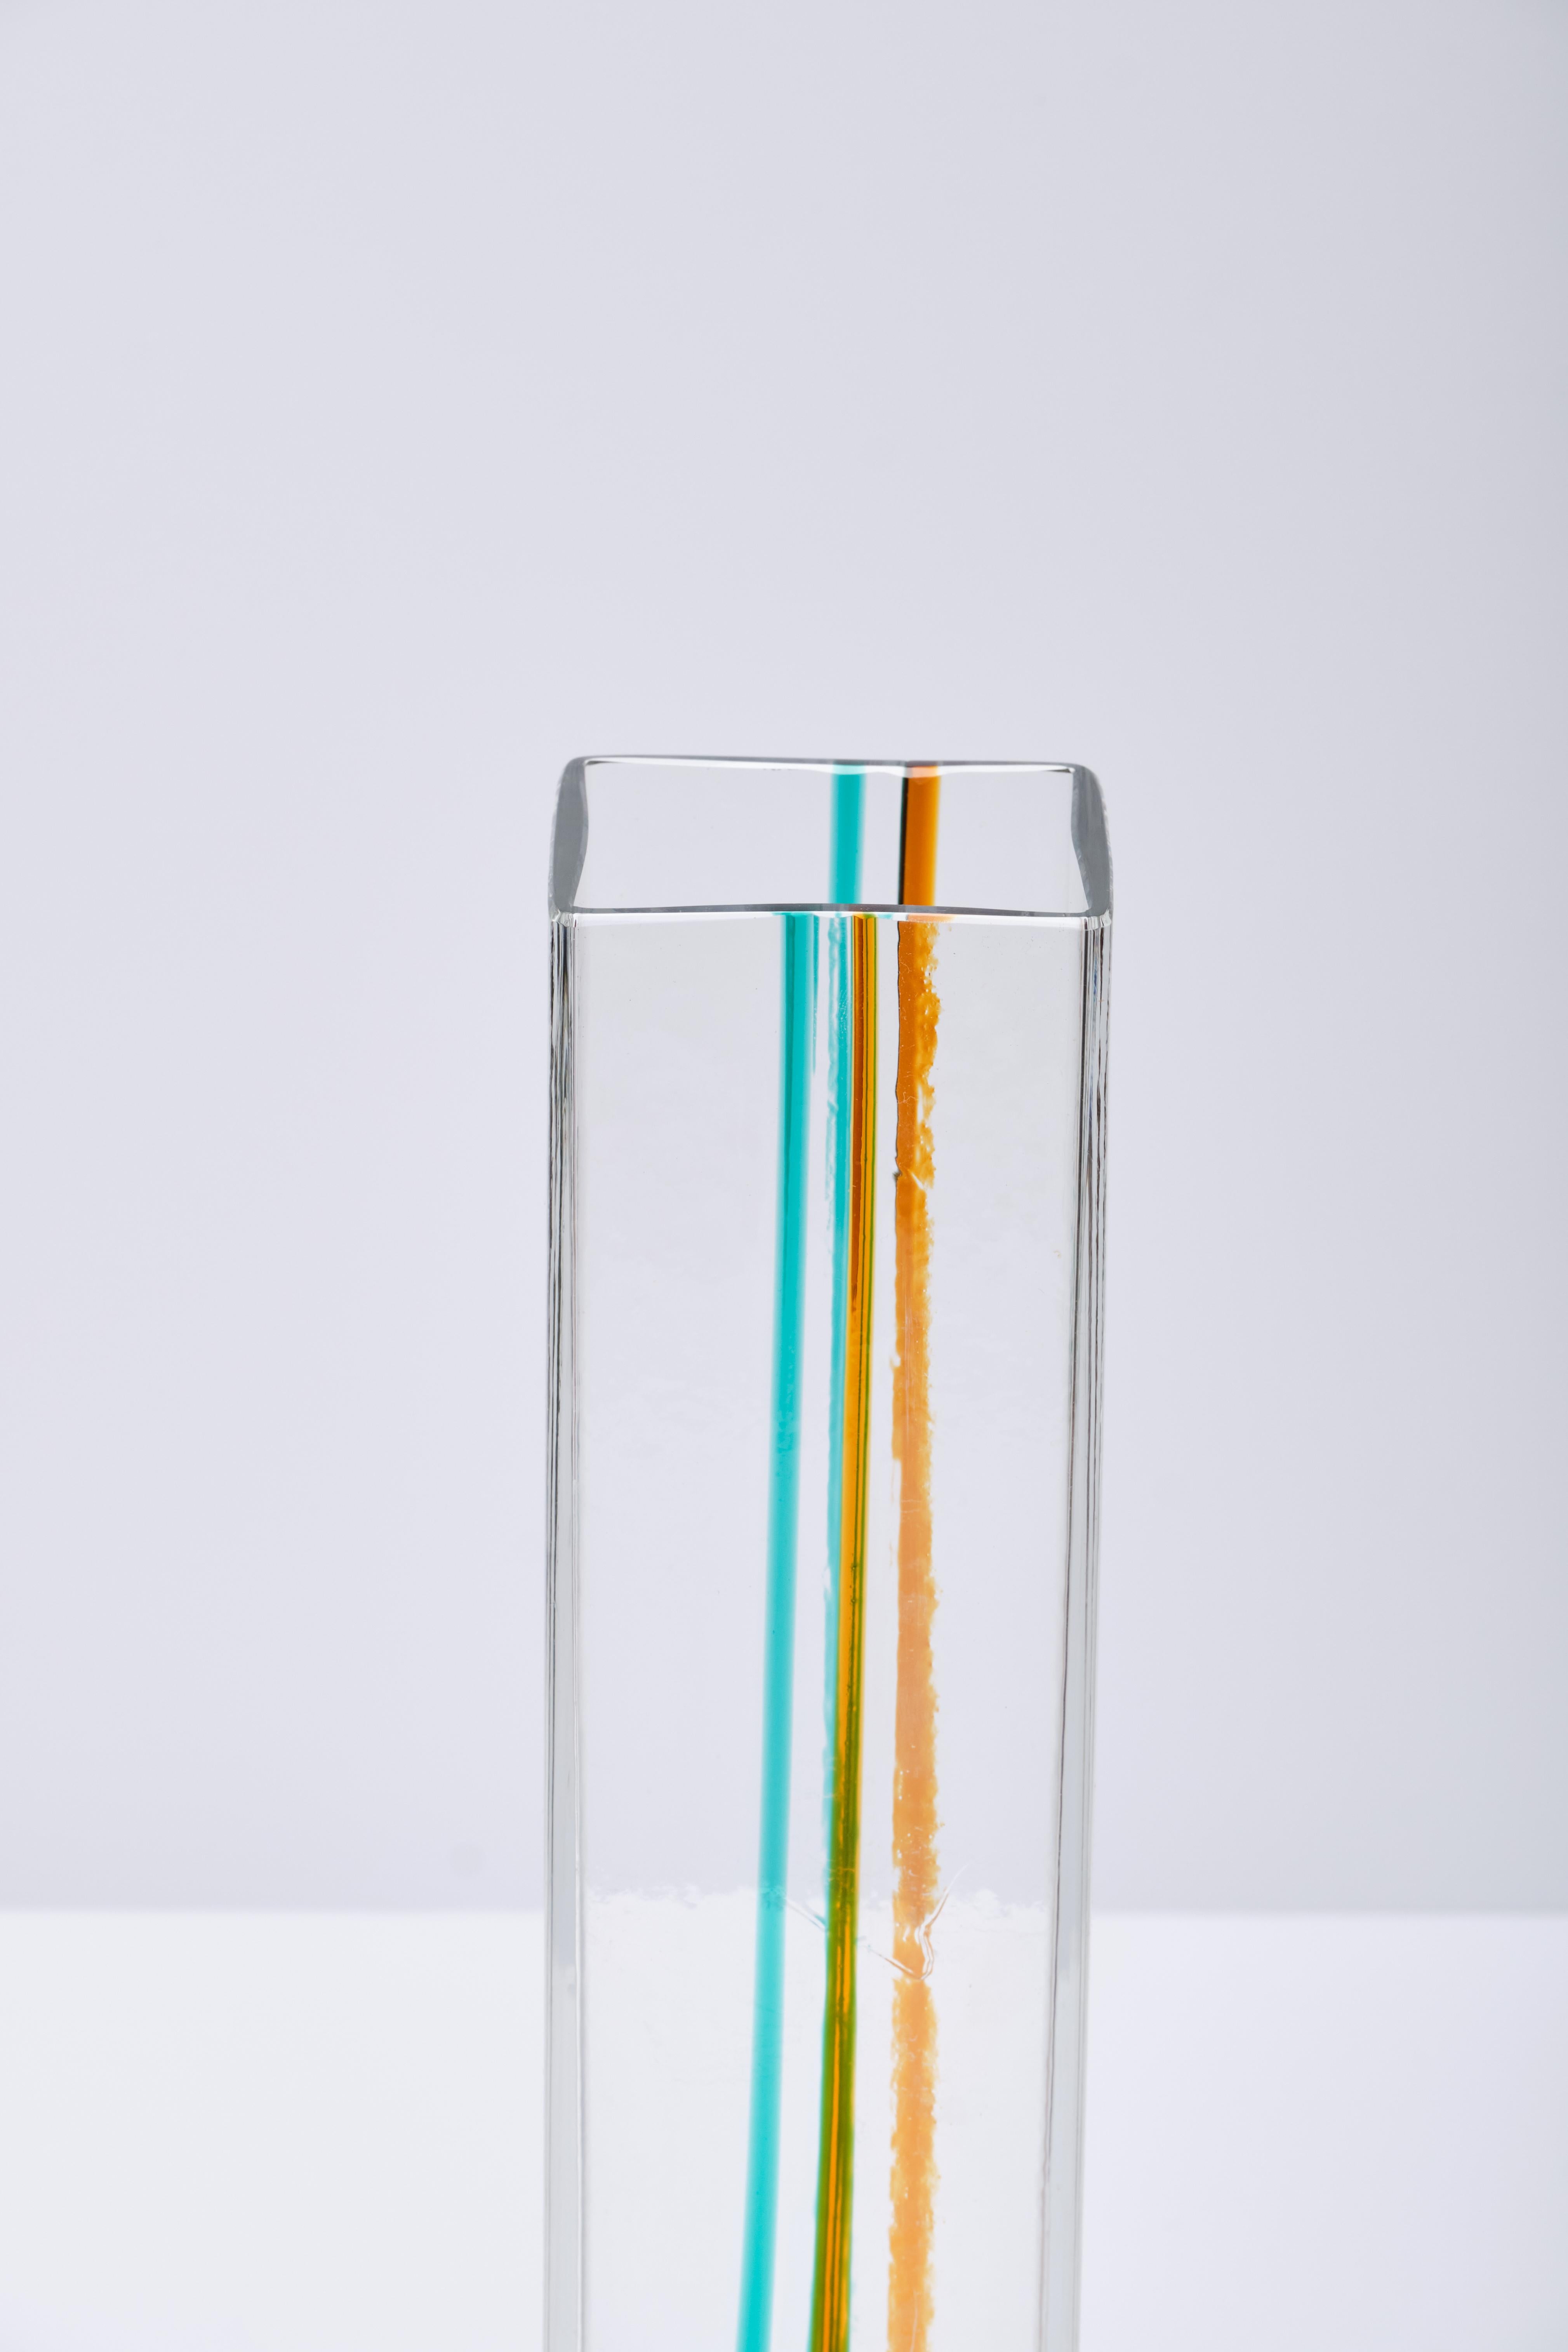 Ludovico Diaz de Santillana Two Venini Murano glass vases - Italian design 1970s For Sale 7